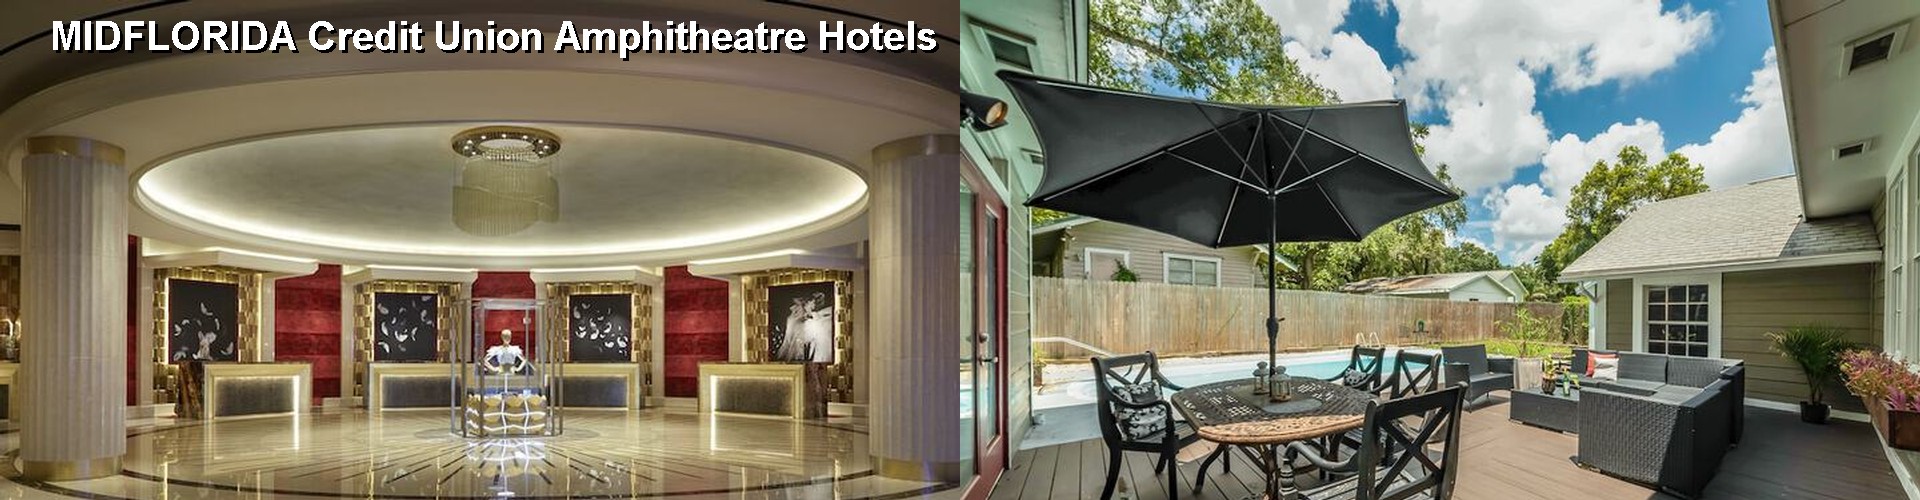 5 Best Hotels near MIDFLORIDA Credit Union Amphitheatre